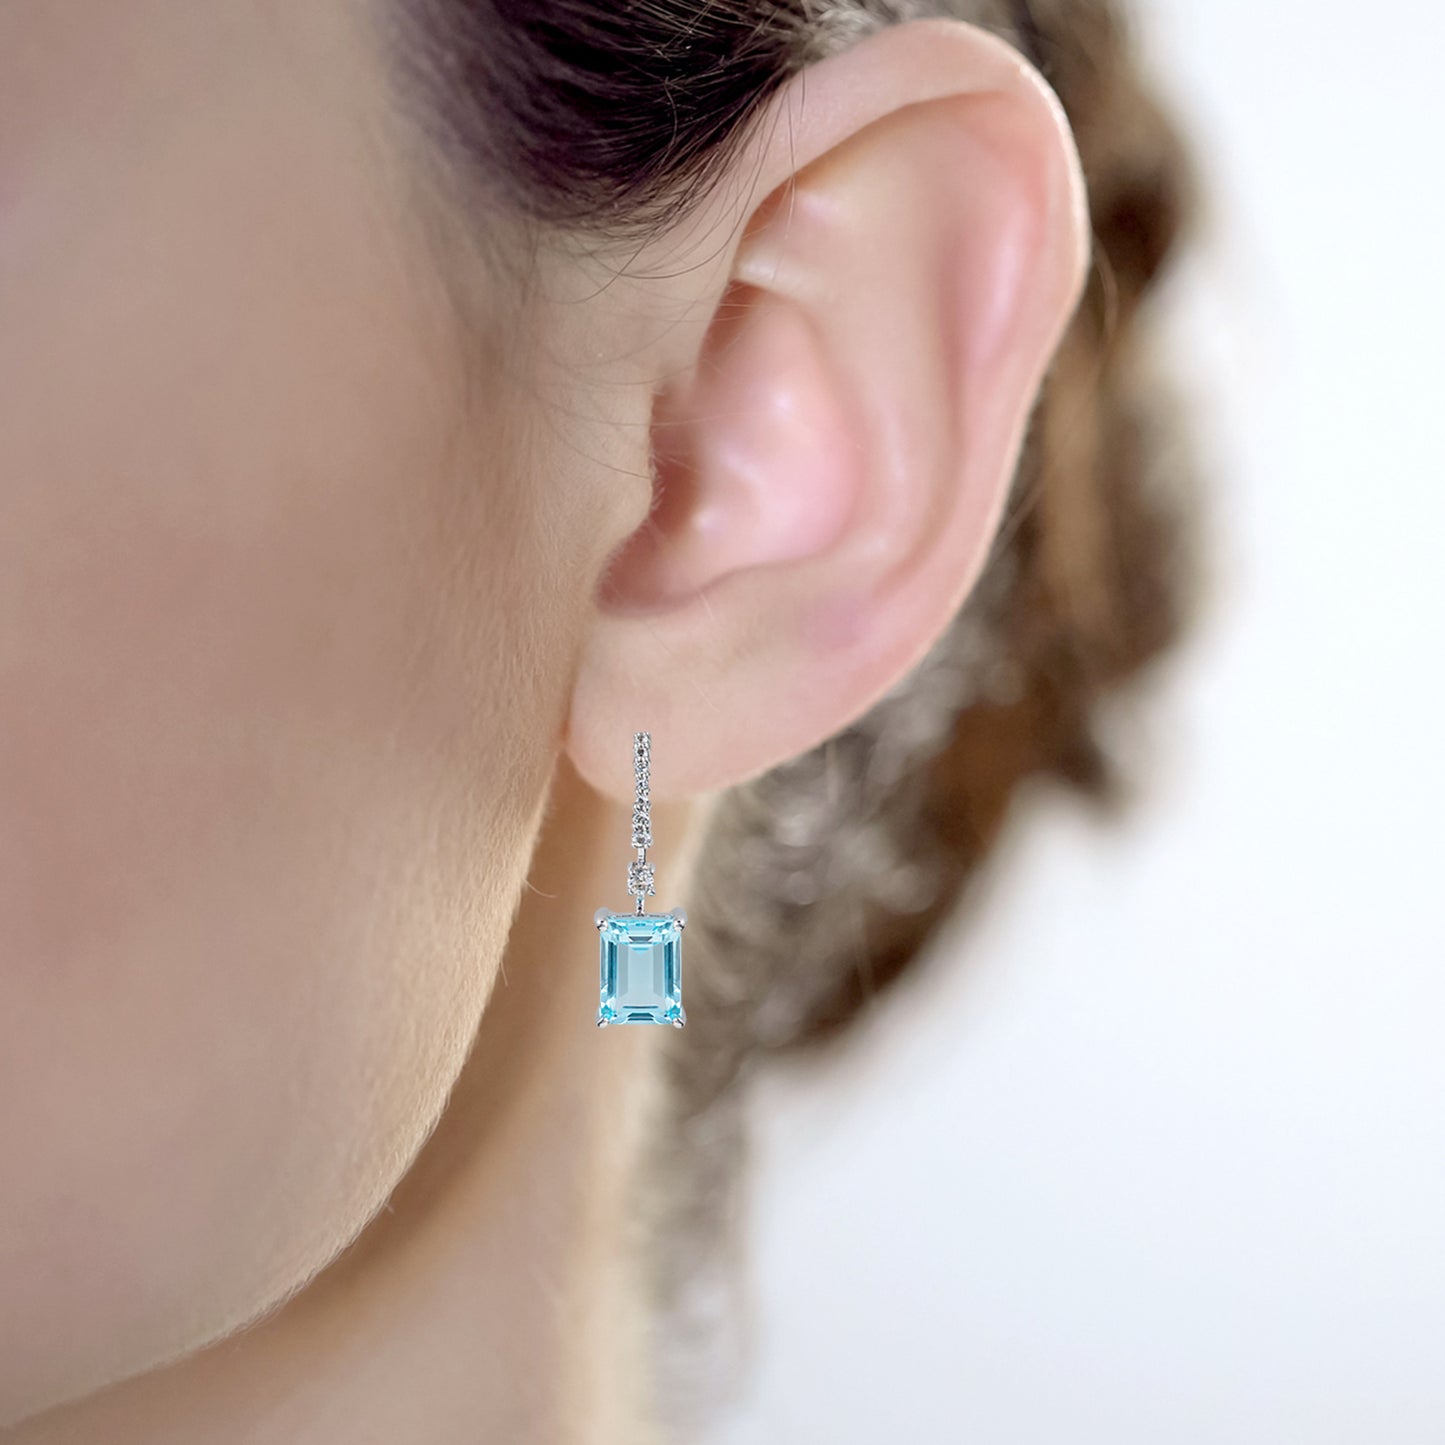 10k White Gold Emerald-Cut Blue Topaz and White Topaz Dangle Earrings